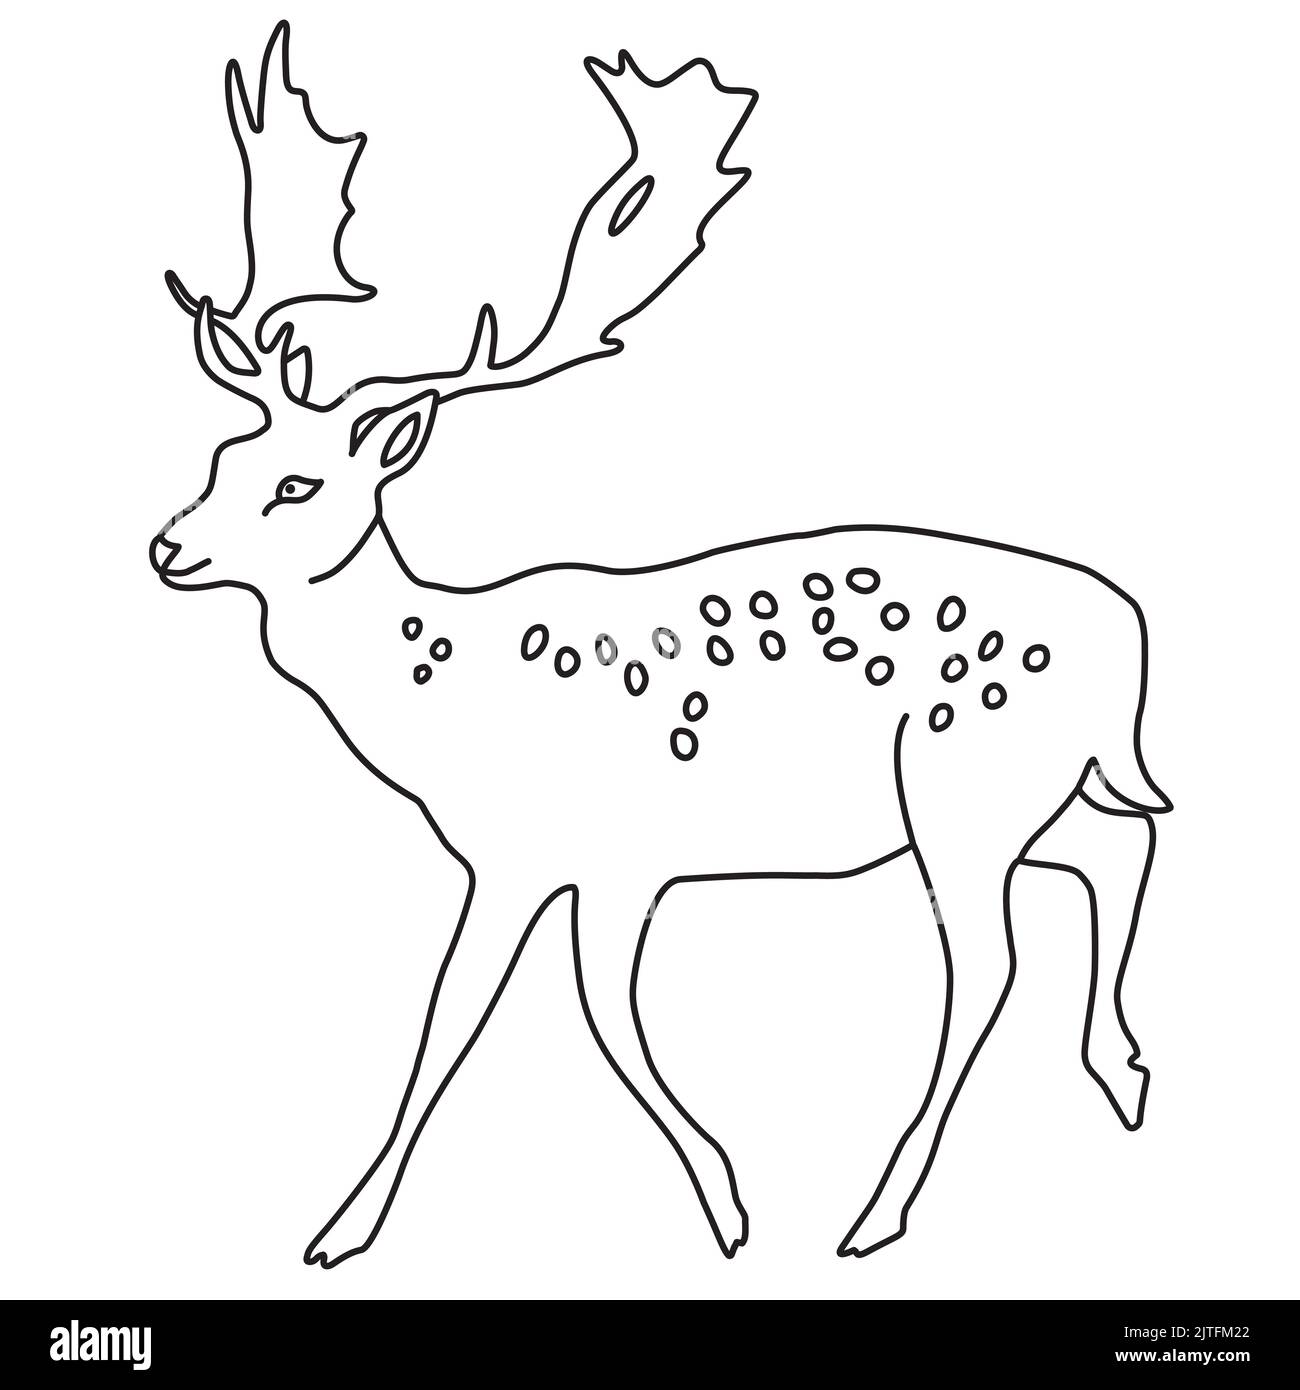 Deer outline silhouette vector illustration isolated on white background Stock Vector